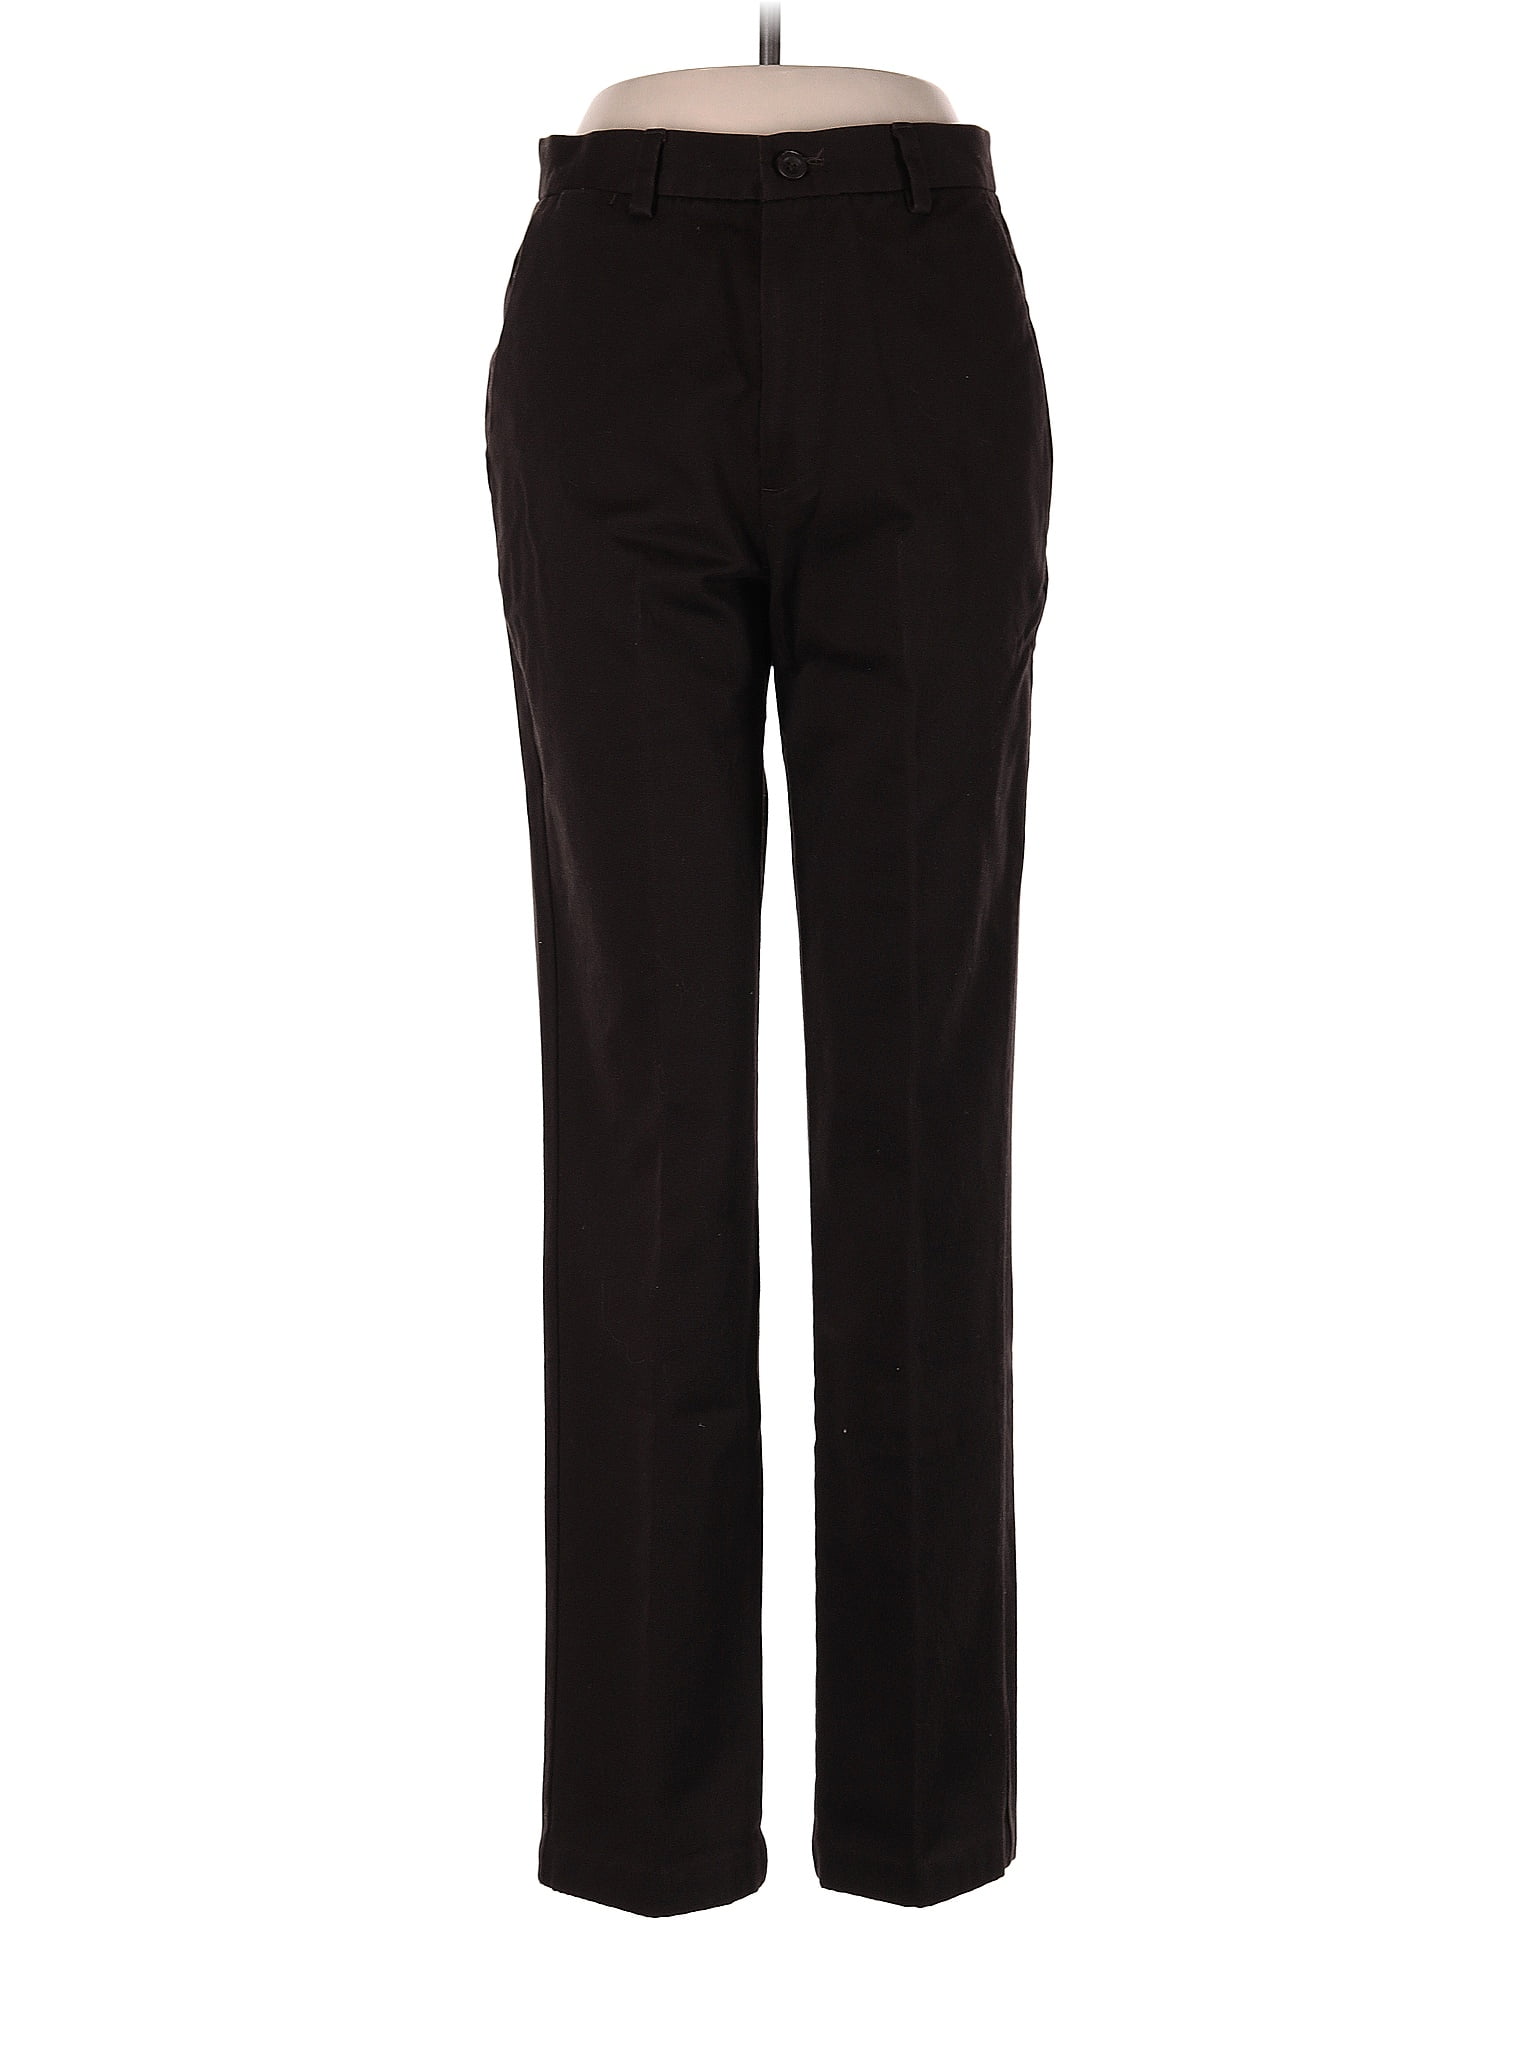 Dockers Black Dress Pants Size 6 - 65% off | ThredUp